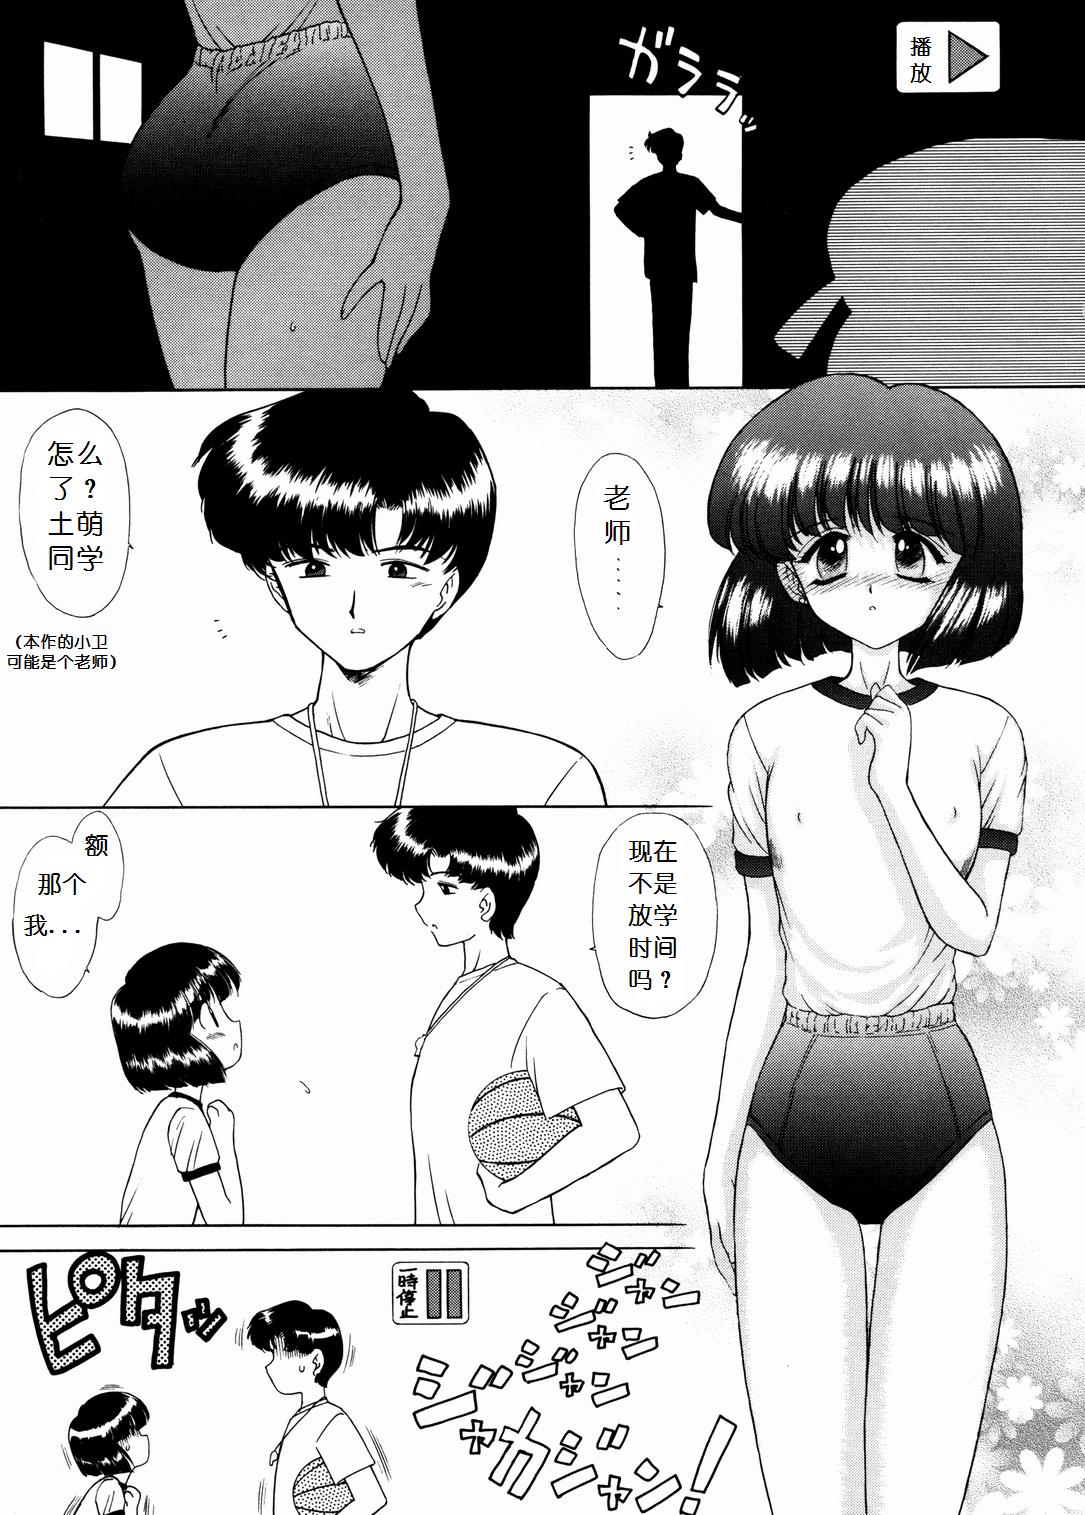 Sucking Cocks talking head and judgement - Sailor moon Por - Page 2